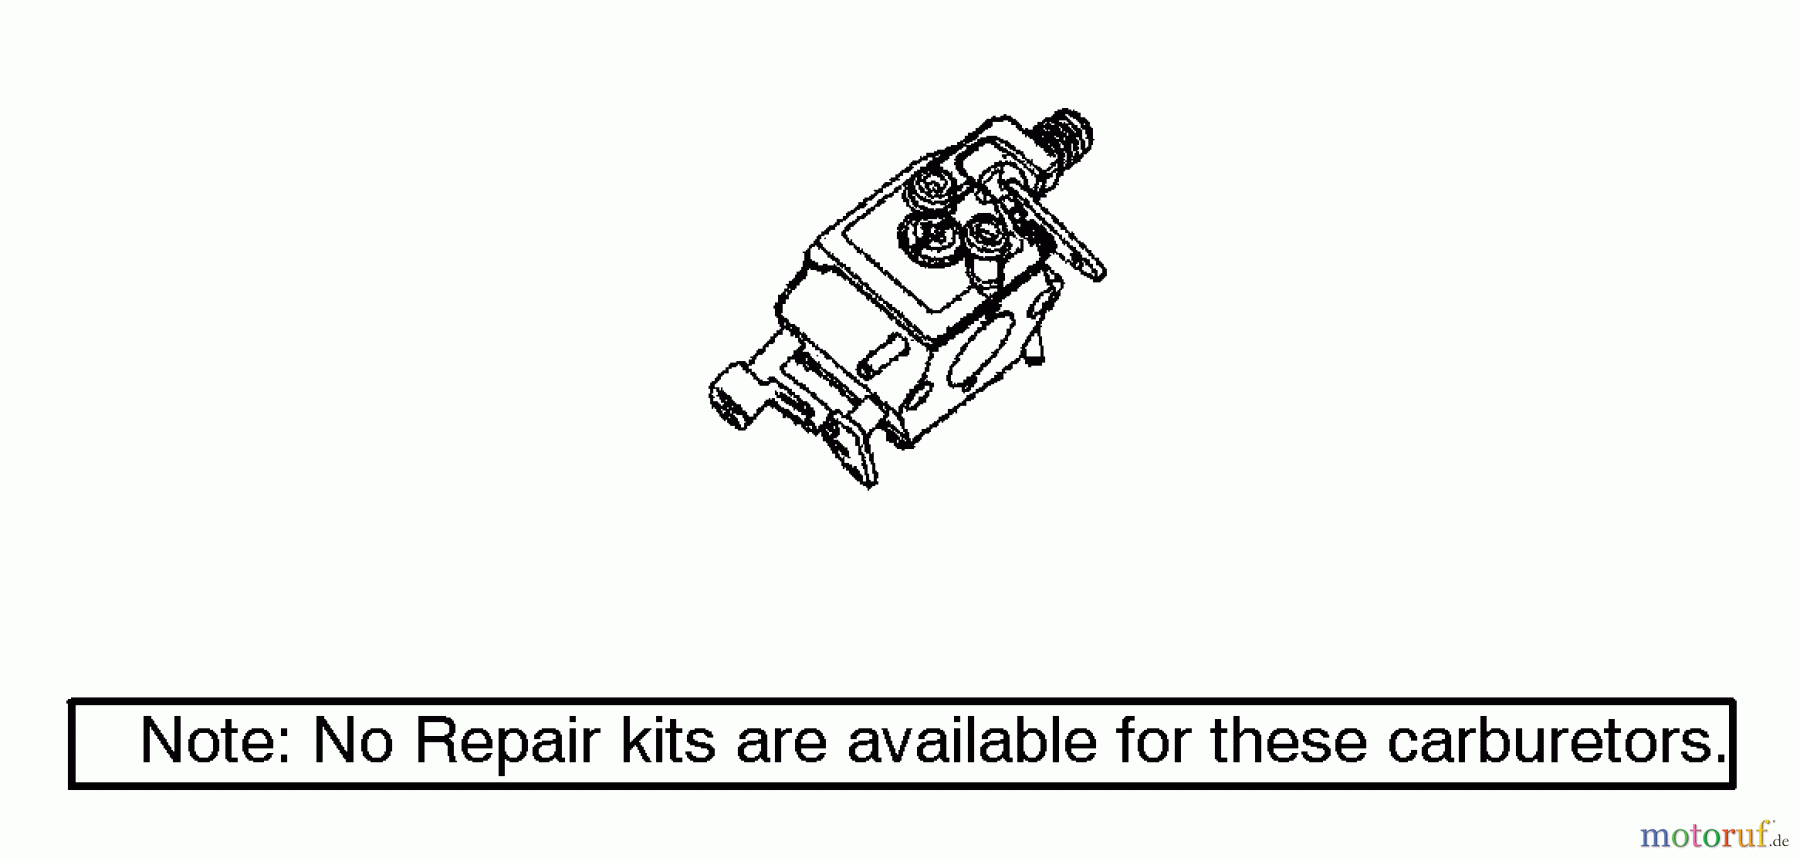  Poulan / Weed Eater Motorsägen 2050 (Type 3) - Poulan Pioneer Chainsaw Carburetor Assembly Kits 530071620/530071820/530071821